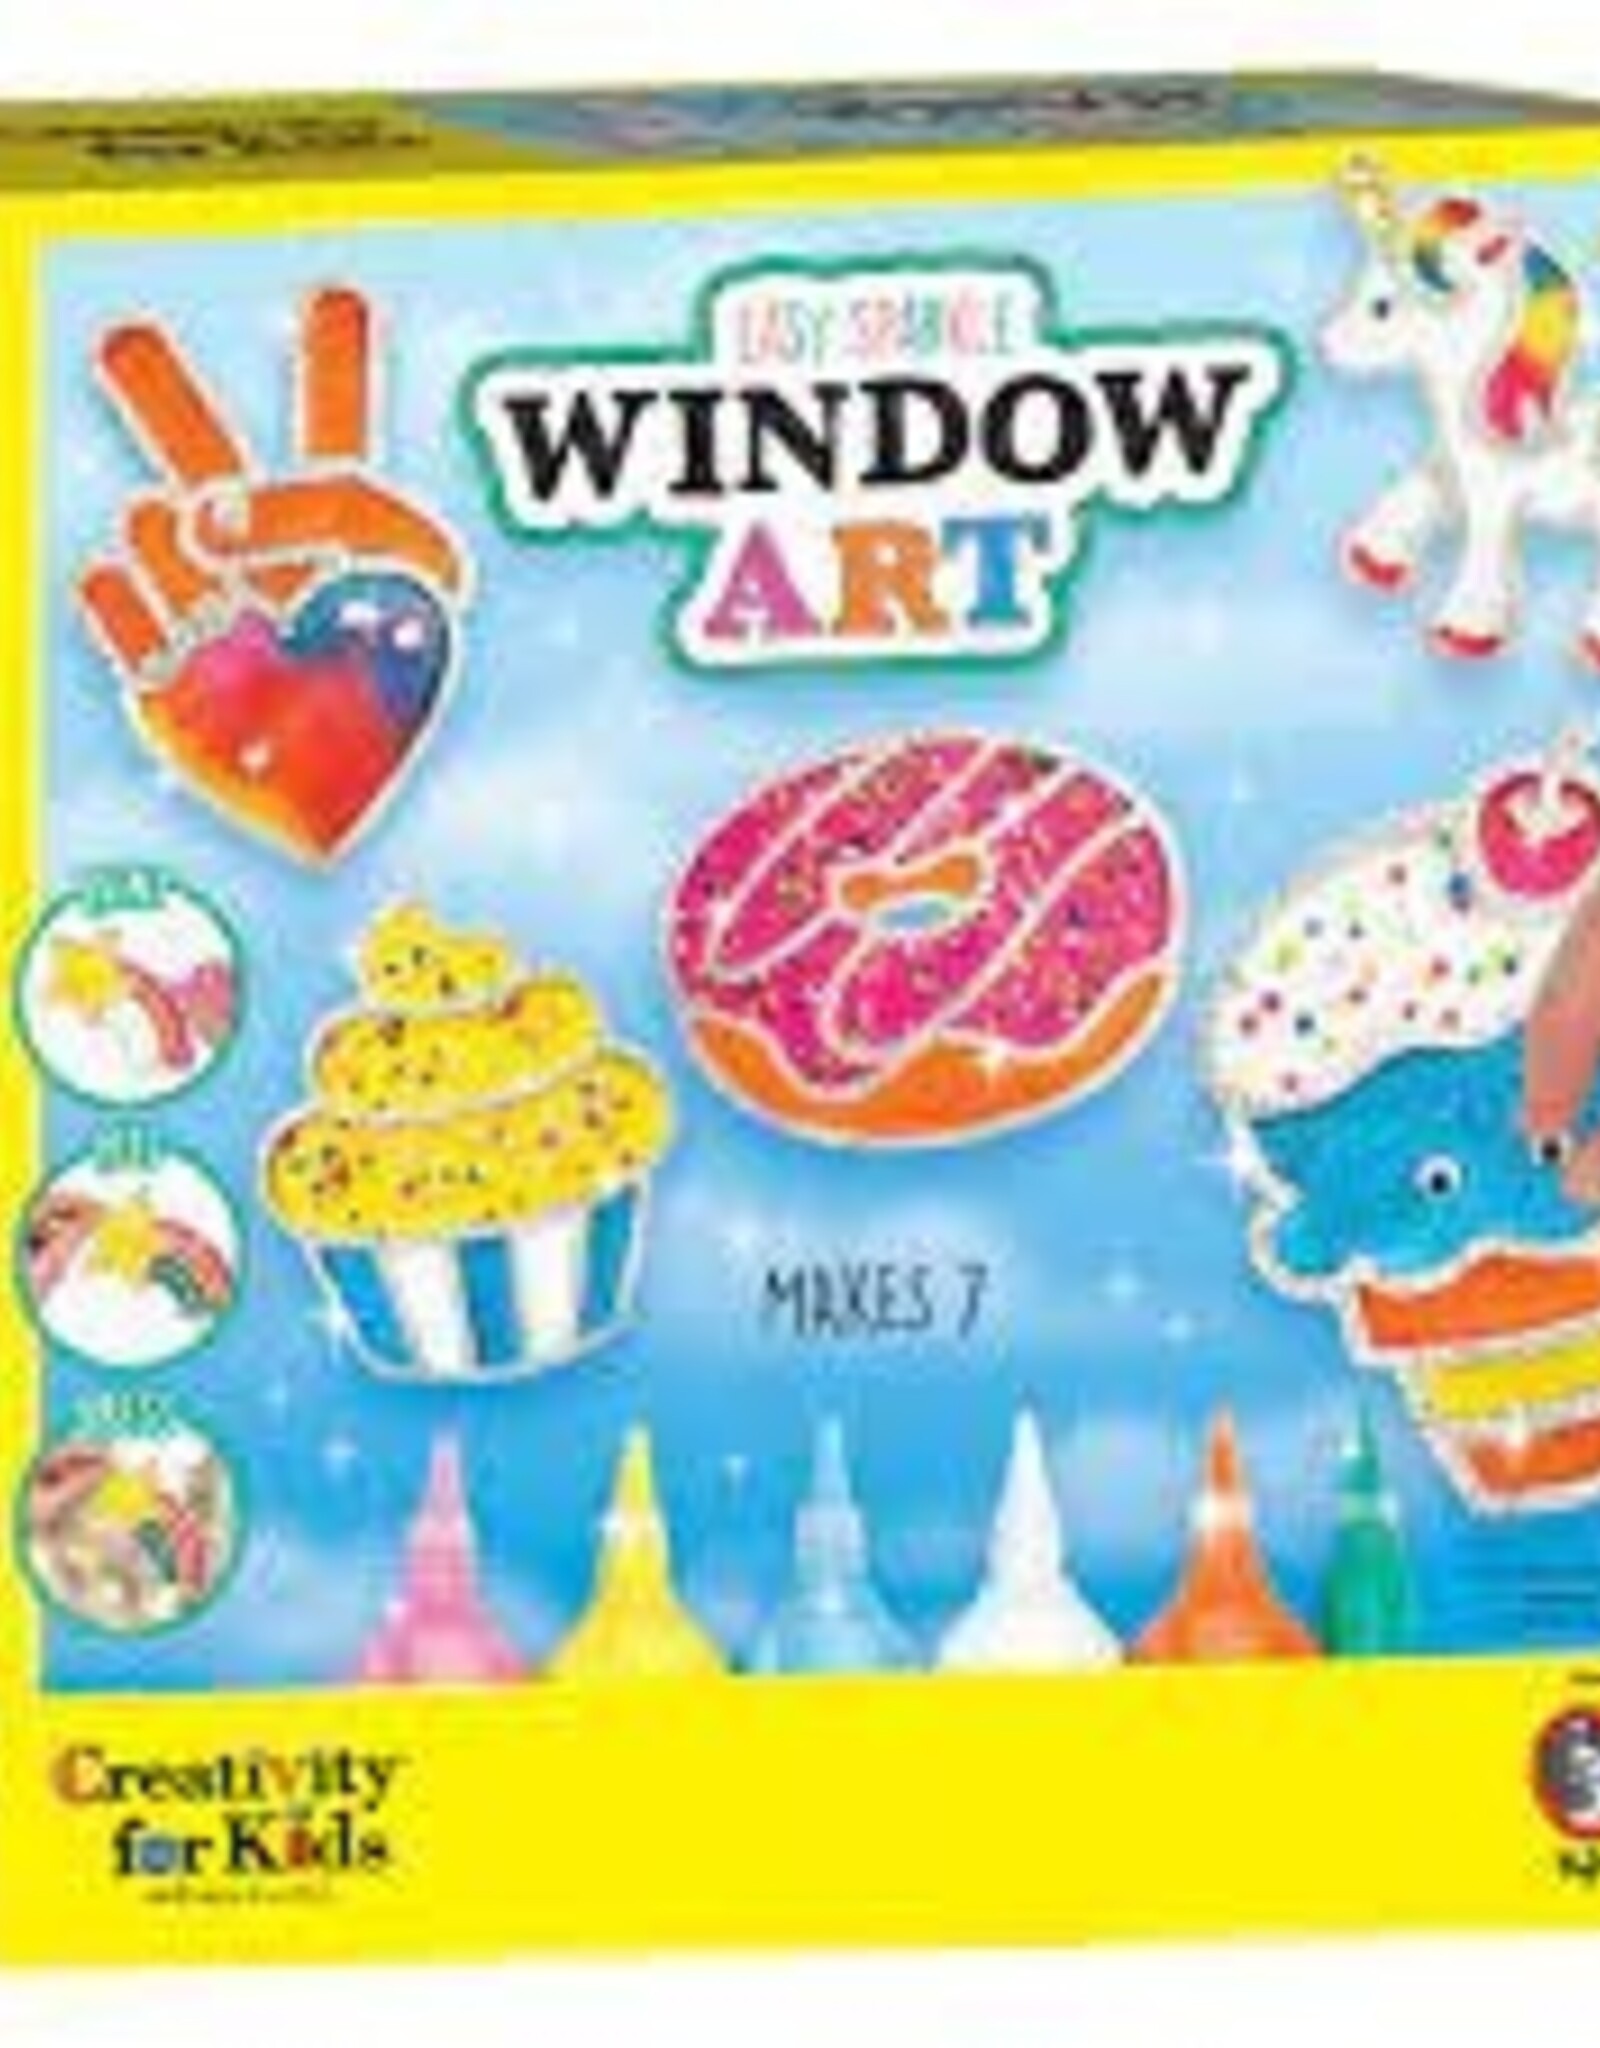 Creativity for Kids Rainbow Sprinkles Easy Sparkle Window Art